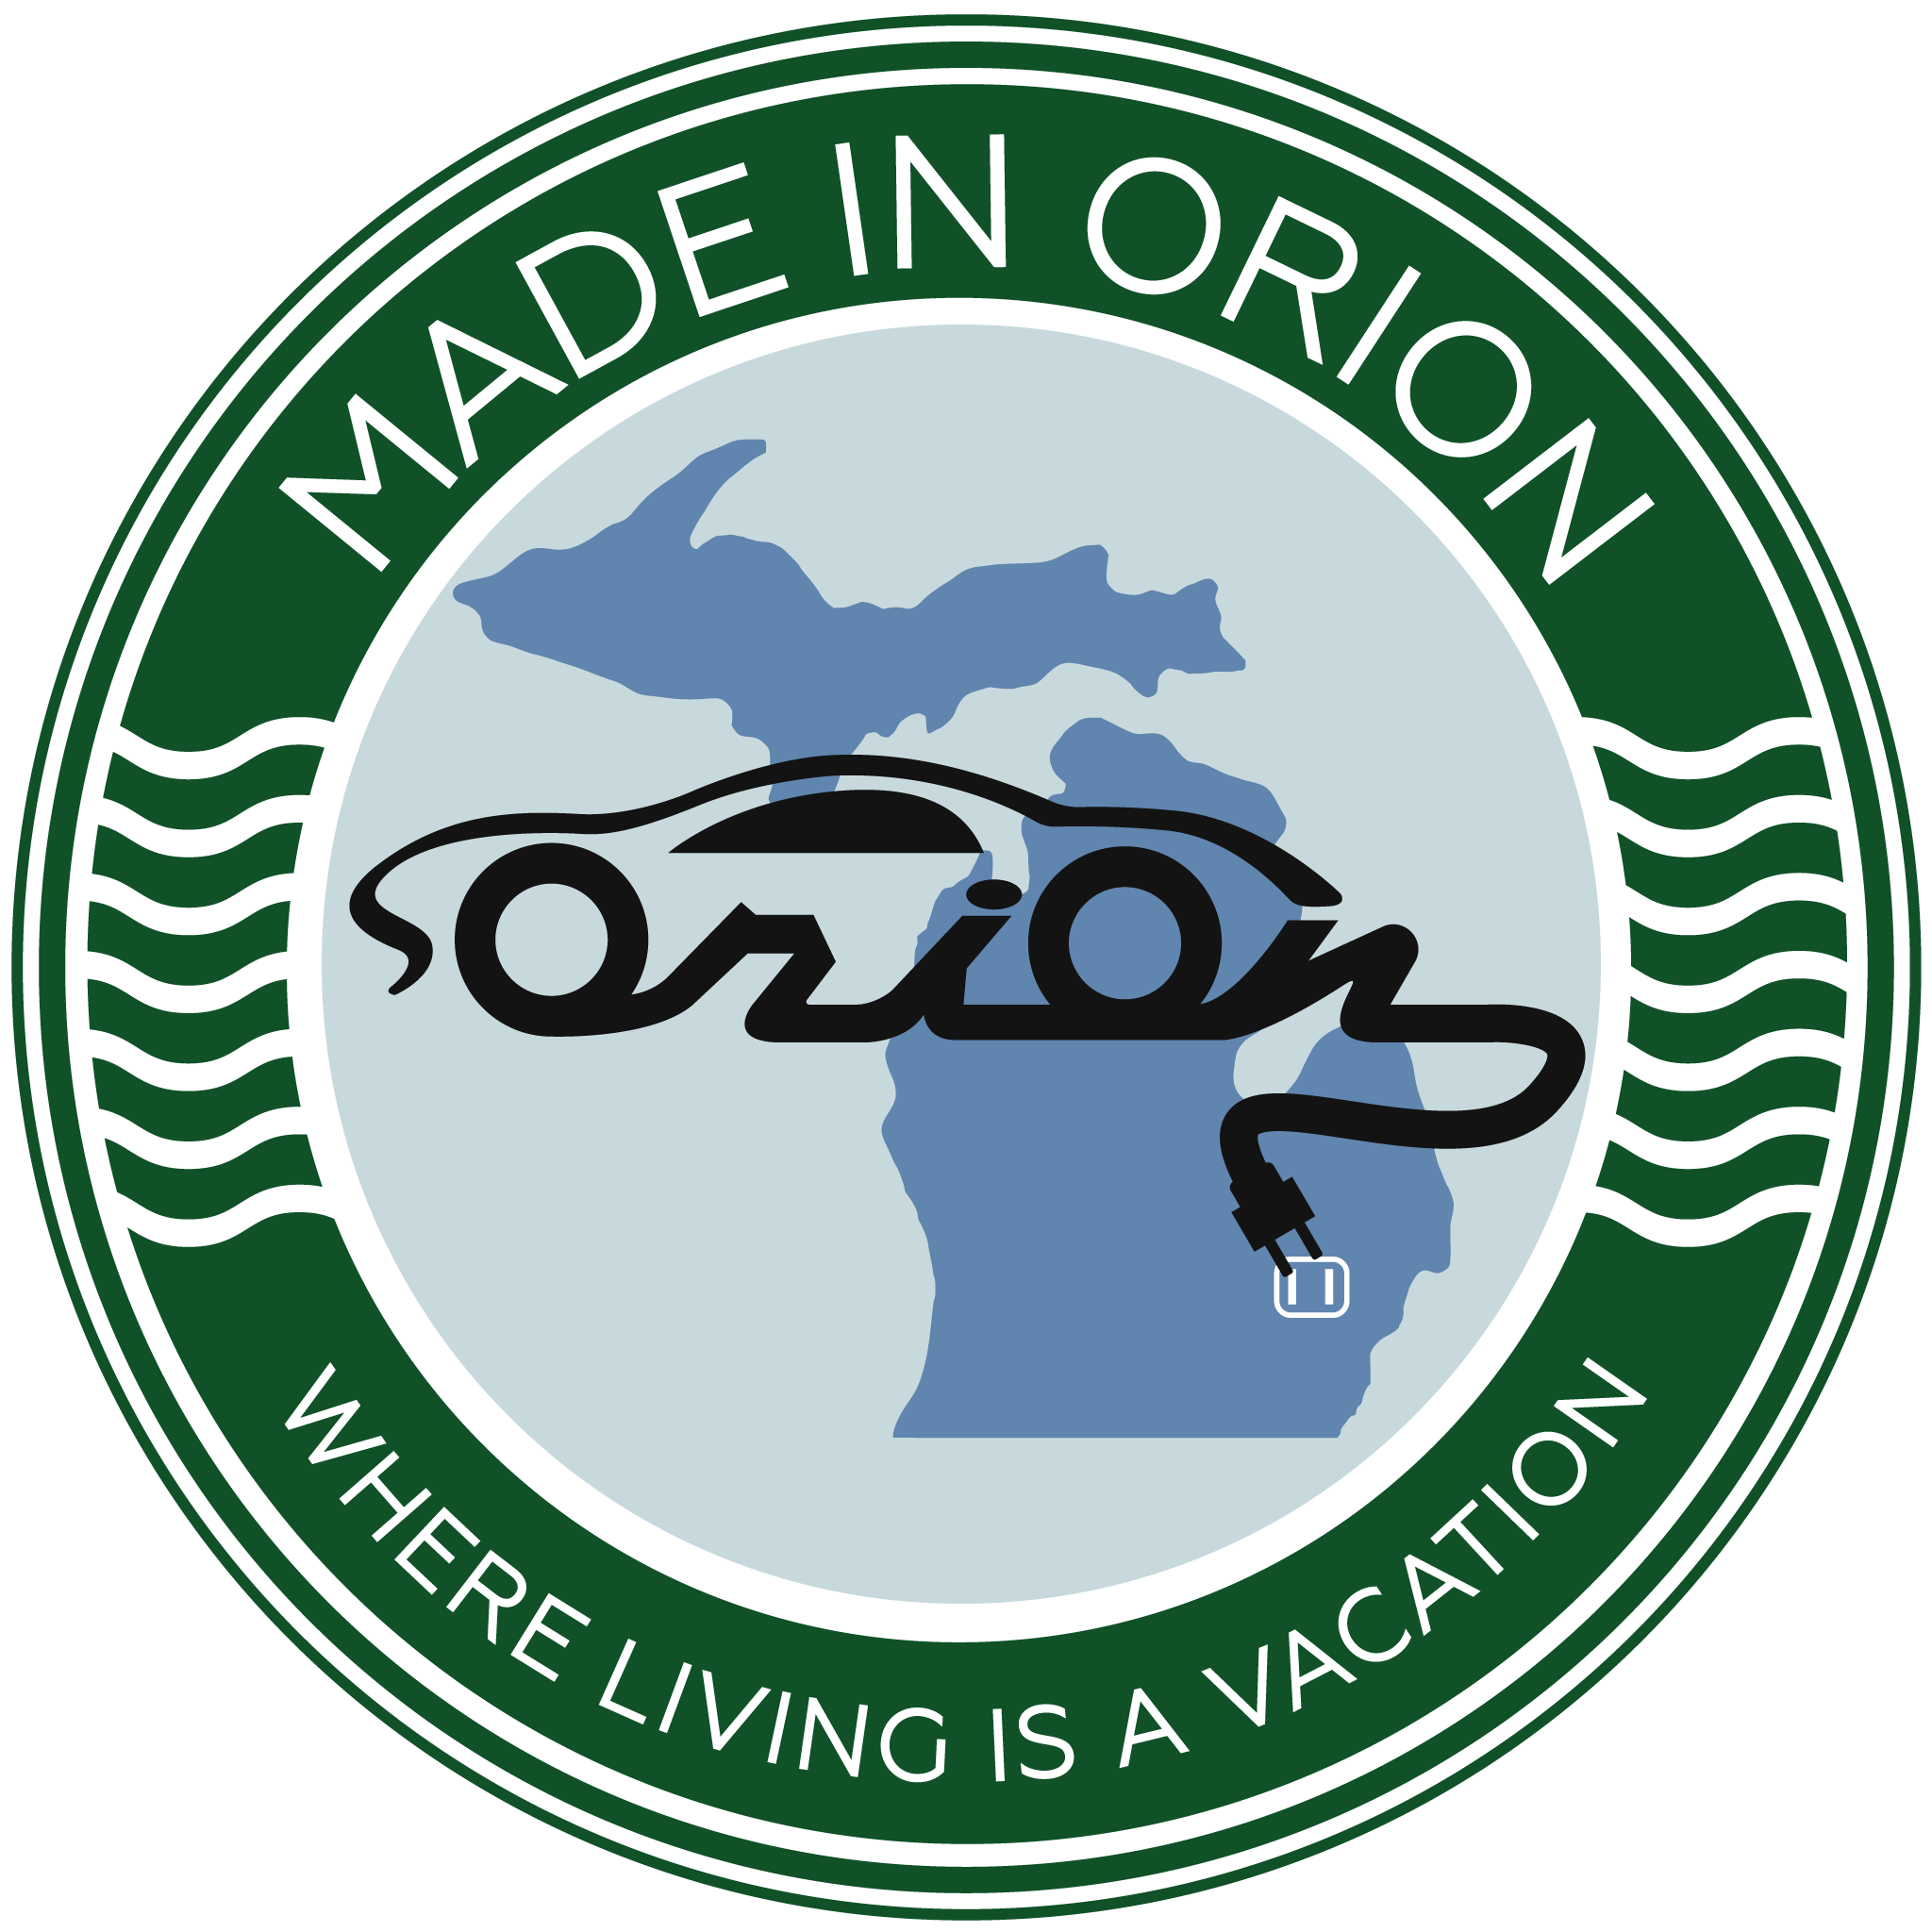 Orion Pictures Logo (old/Textures) by mfdanhstudiosart on DeviantArt